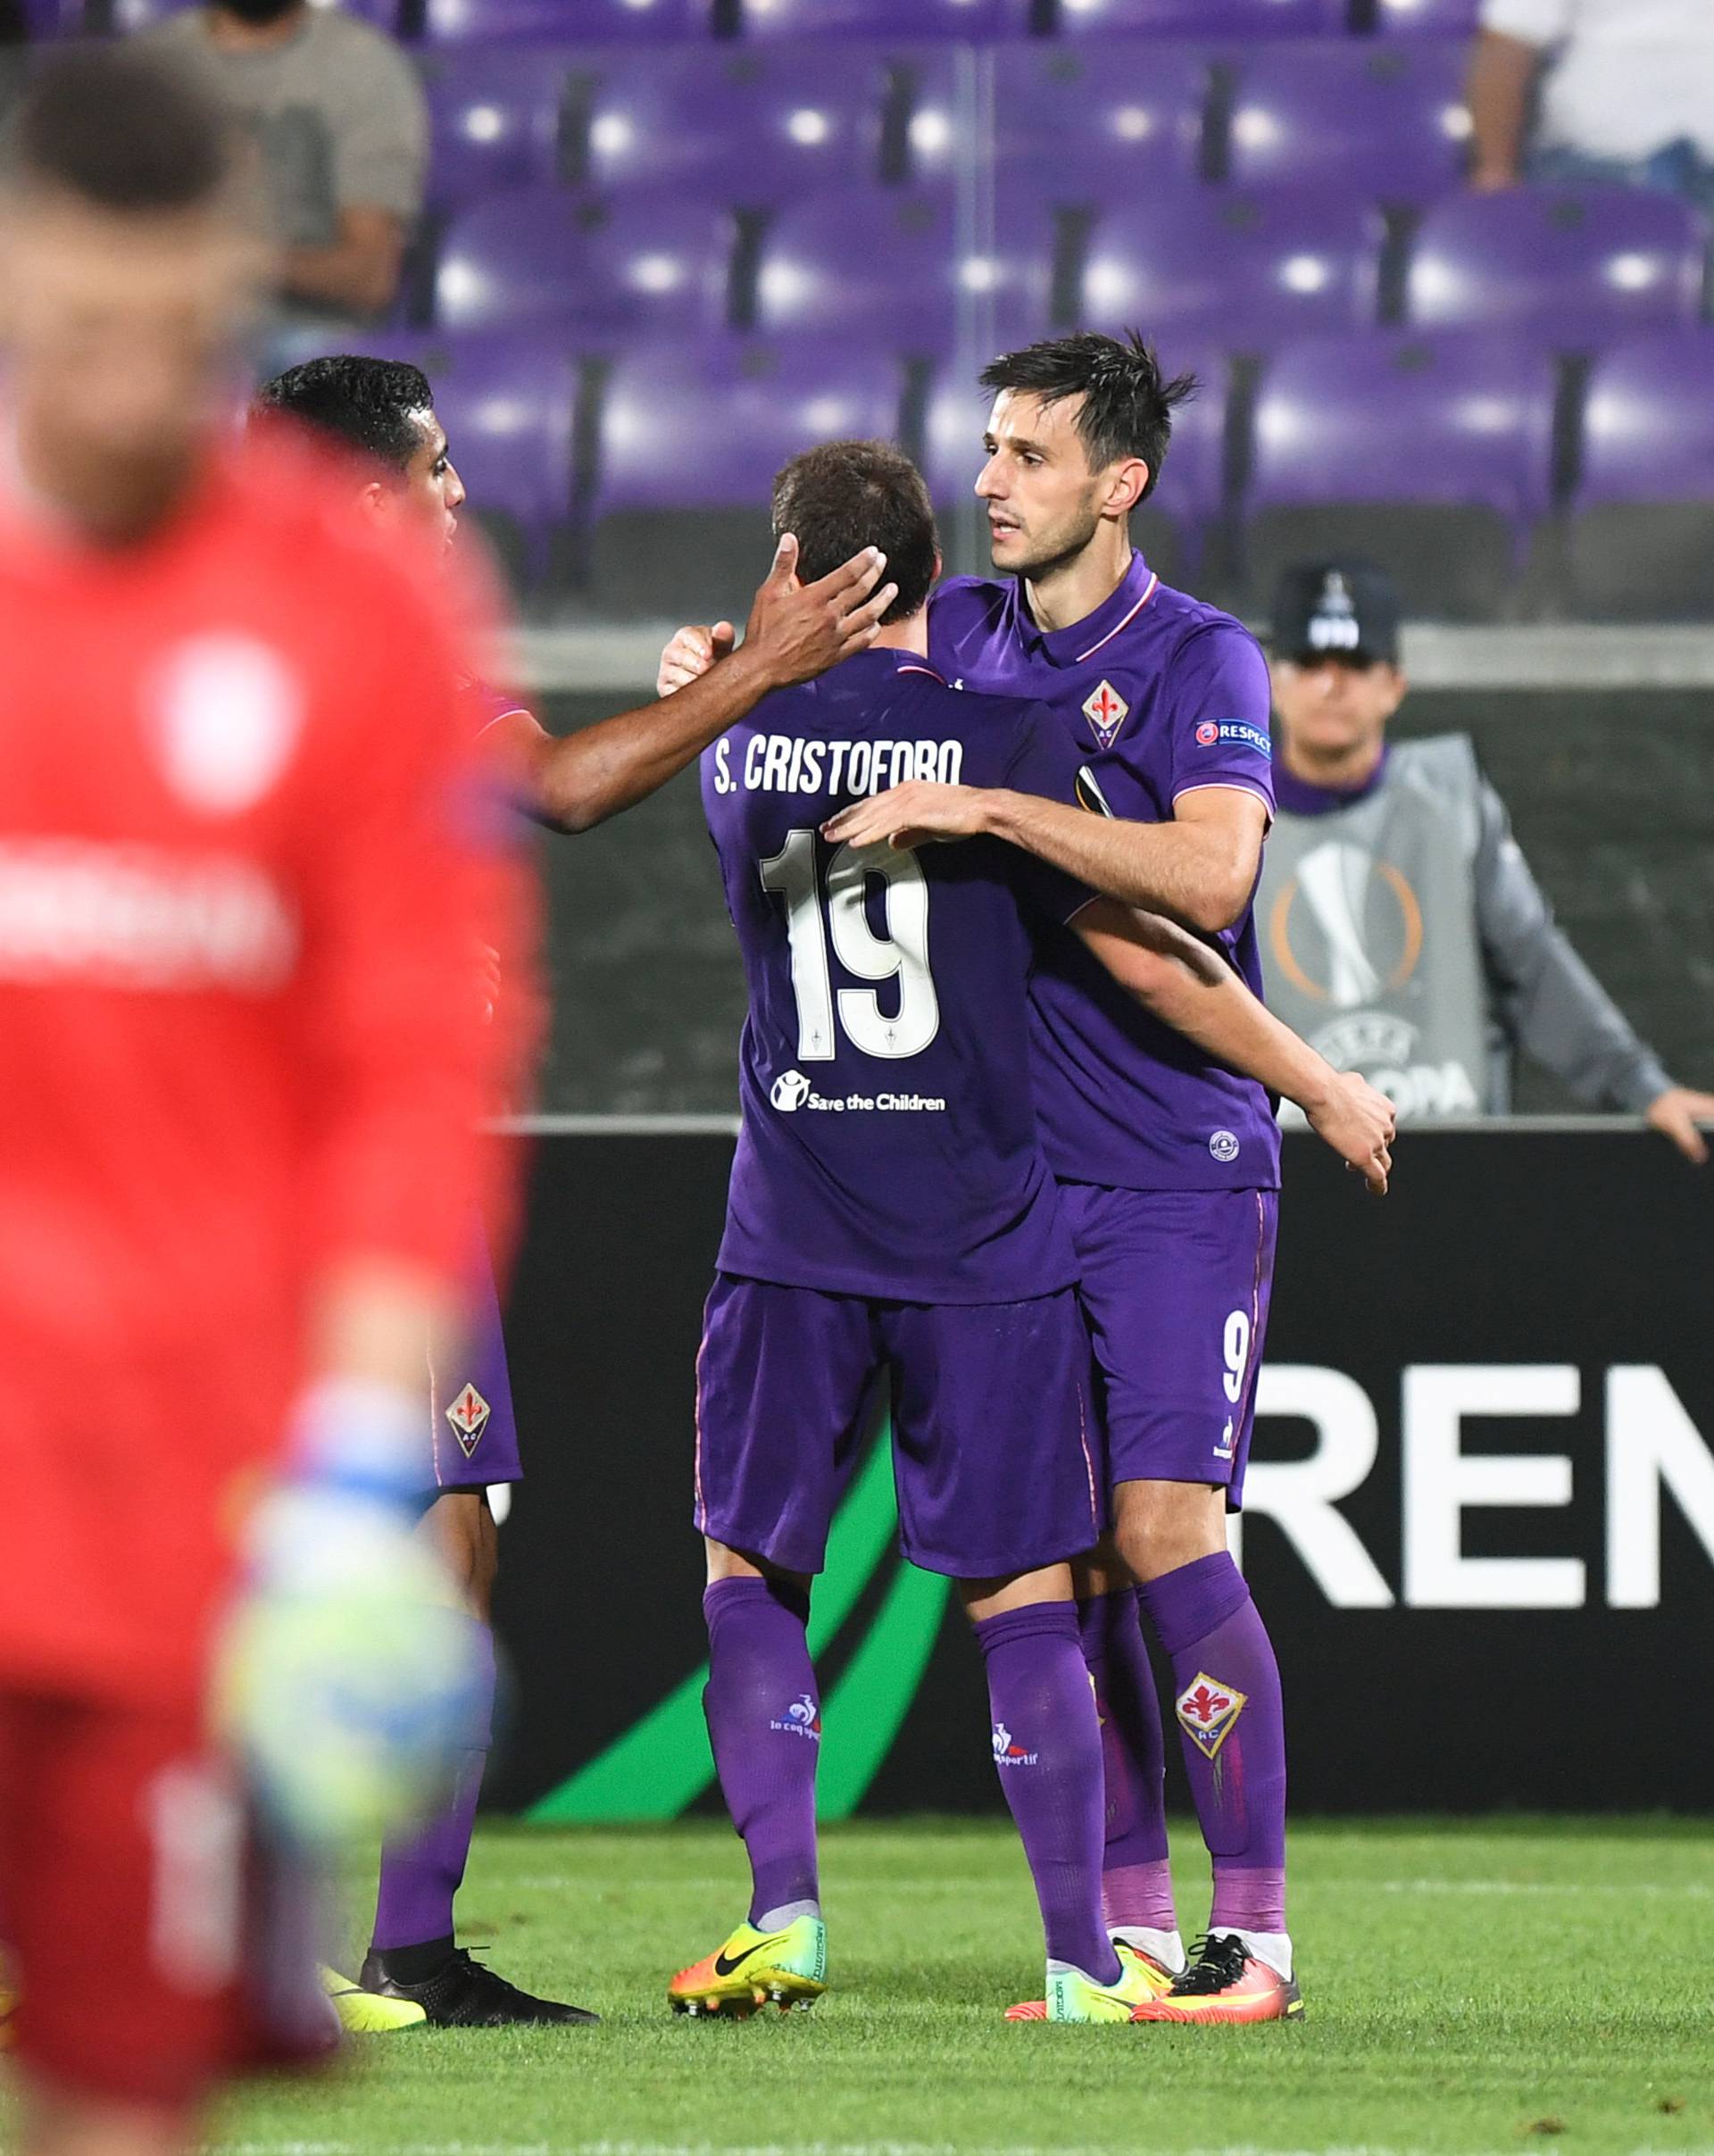 Football Soccer - Fiorentina v Qarabag - UEFA Europa League Group Stage - Group J